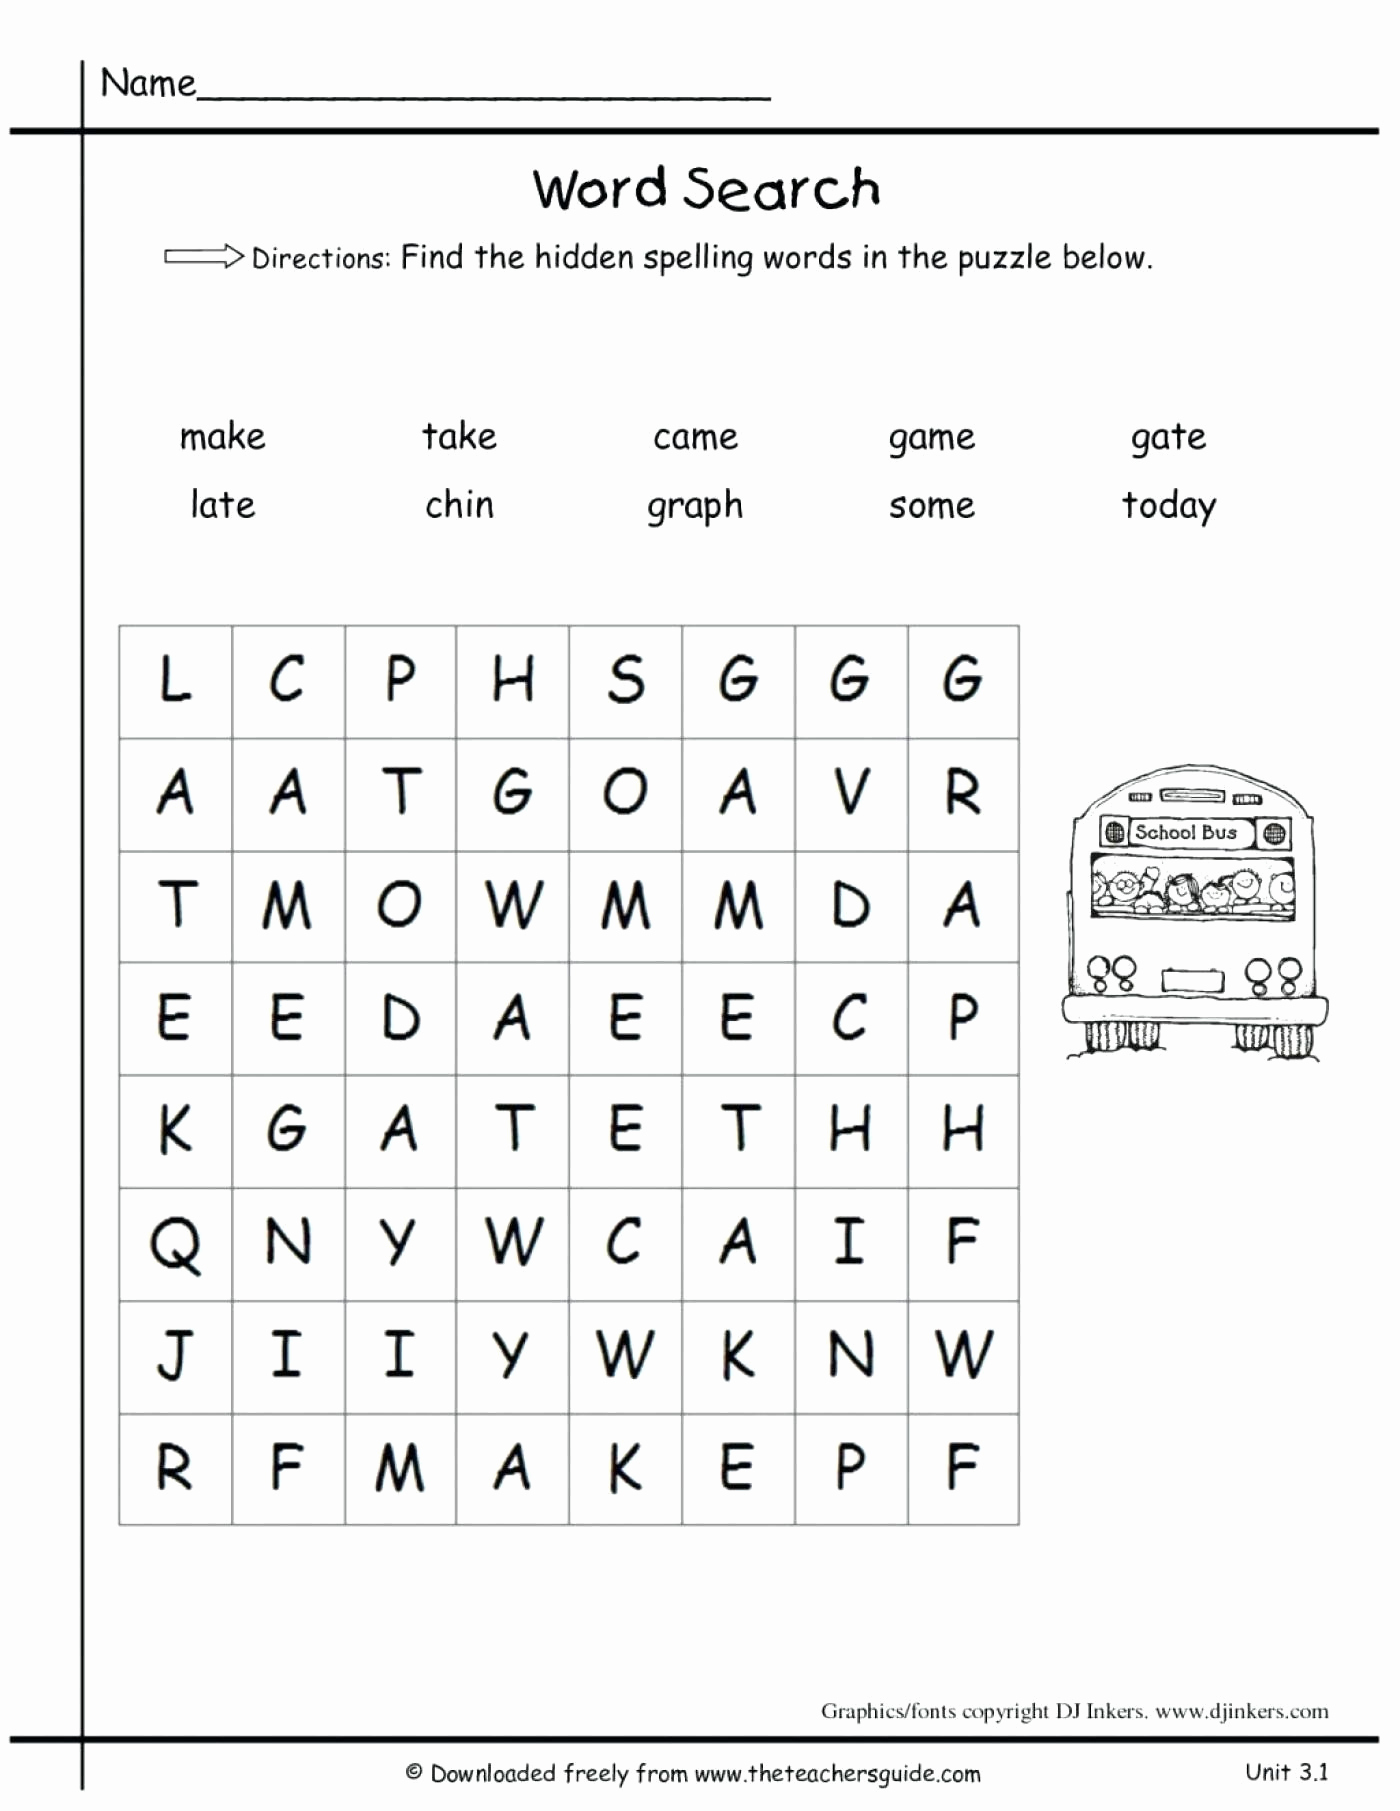 6th Grade Math Puzzle Worksheets Unique 6th Grade Math Puzzle Worksheets Math Crossword Puzzles